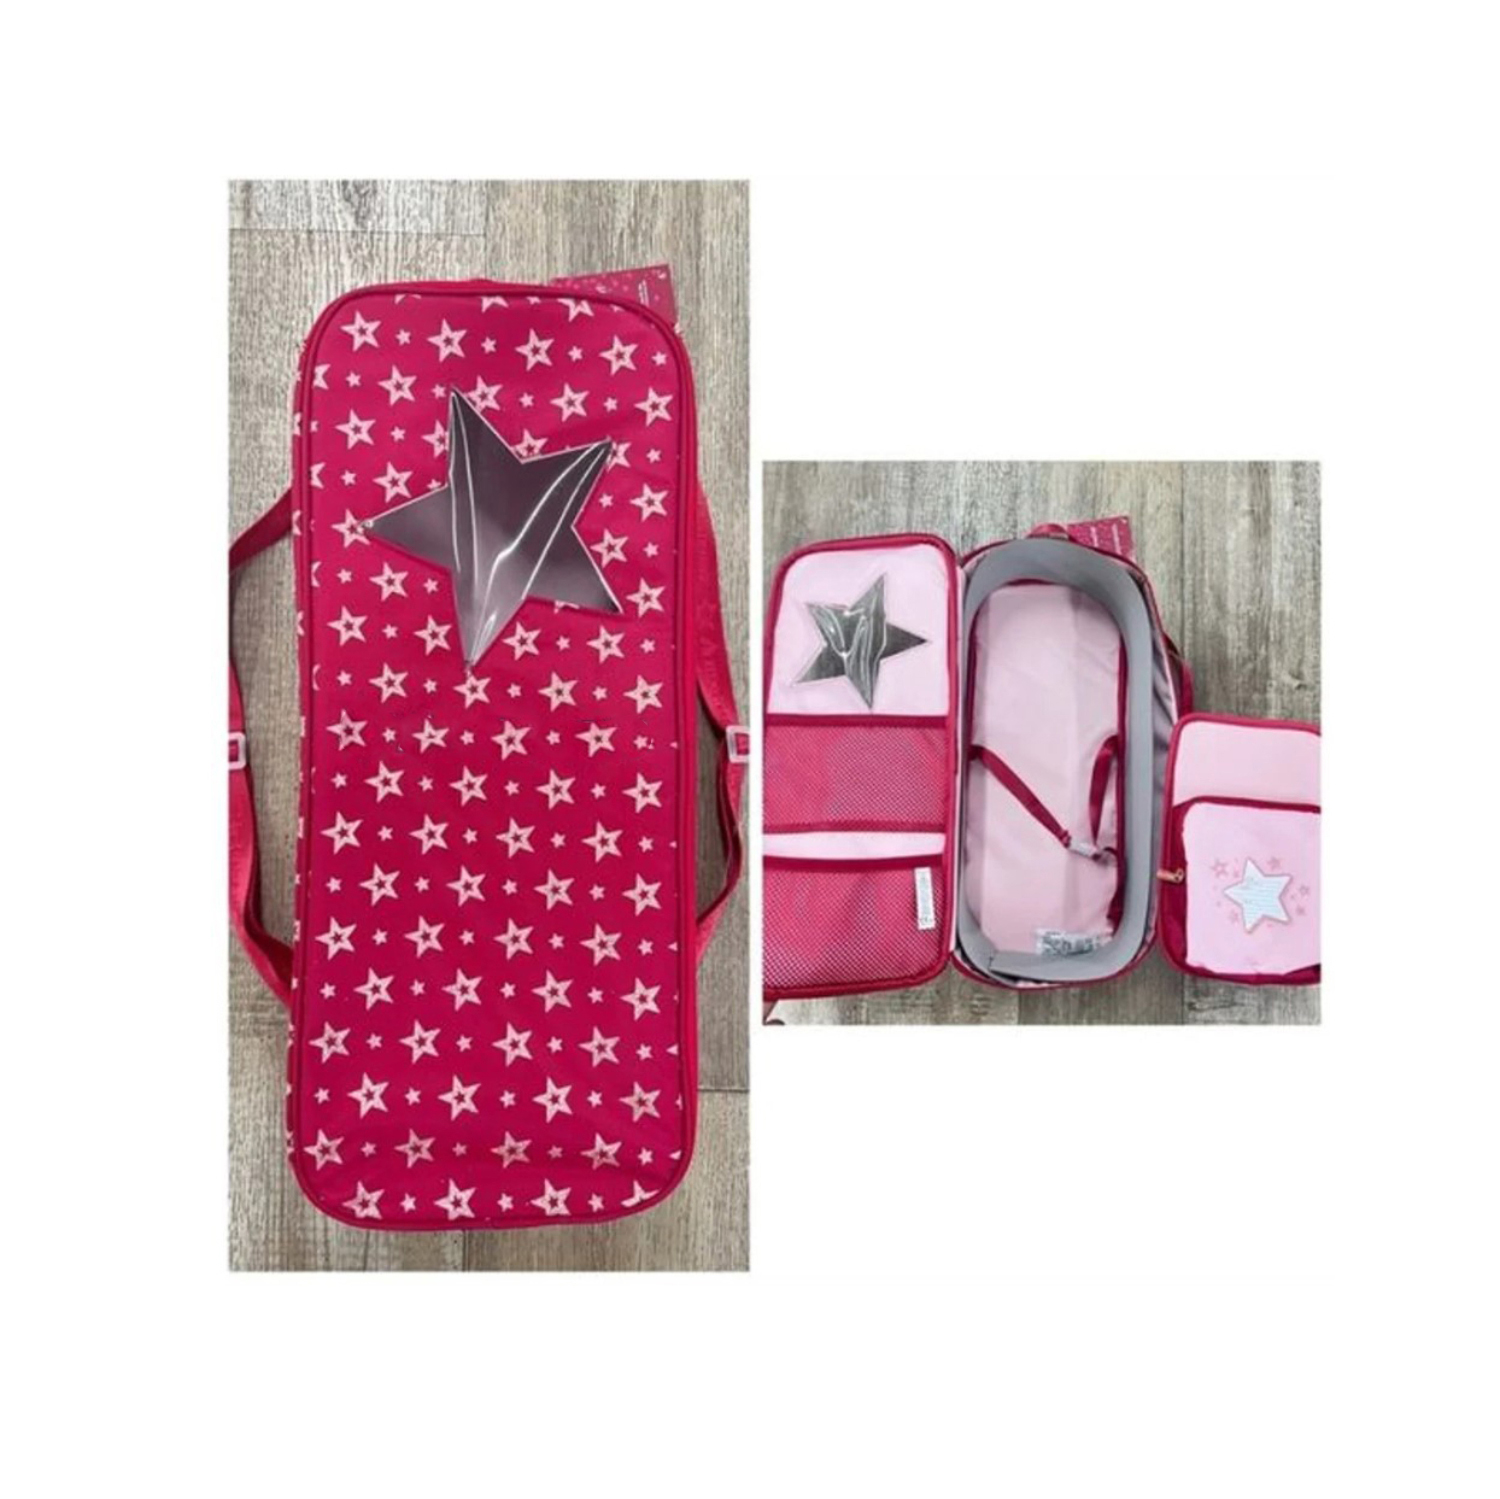 Altatac Doll Backpack for 18 inch Dolls Pink Star Glitery Bag Travel Carrier For Girls